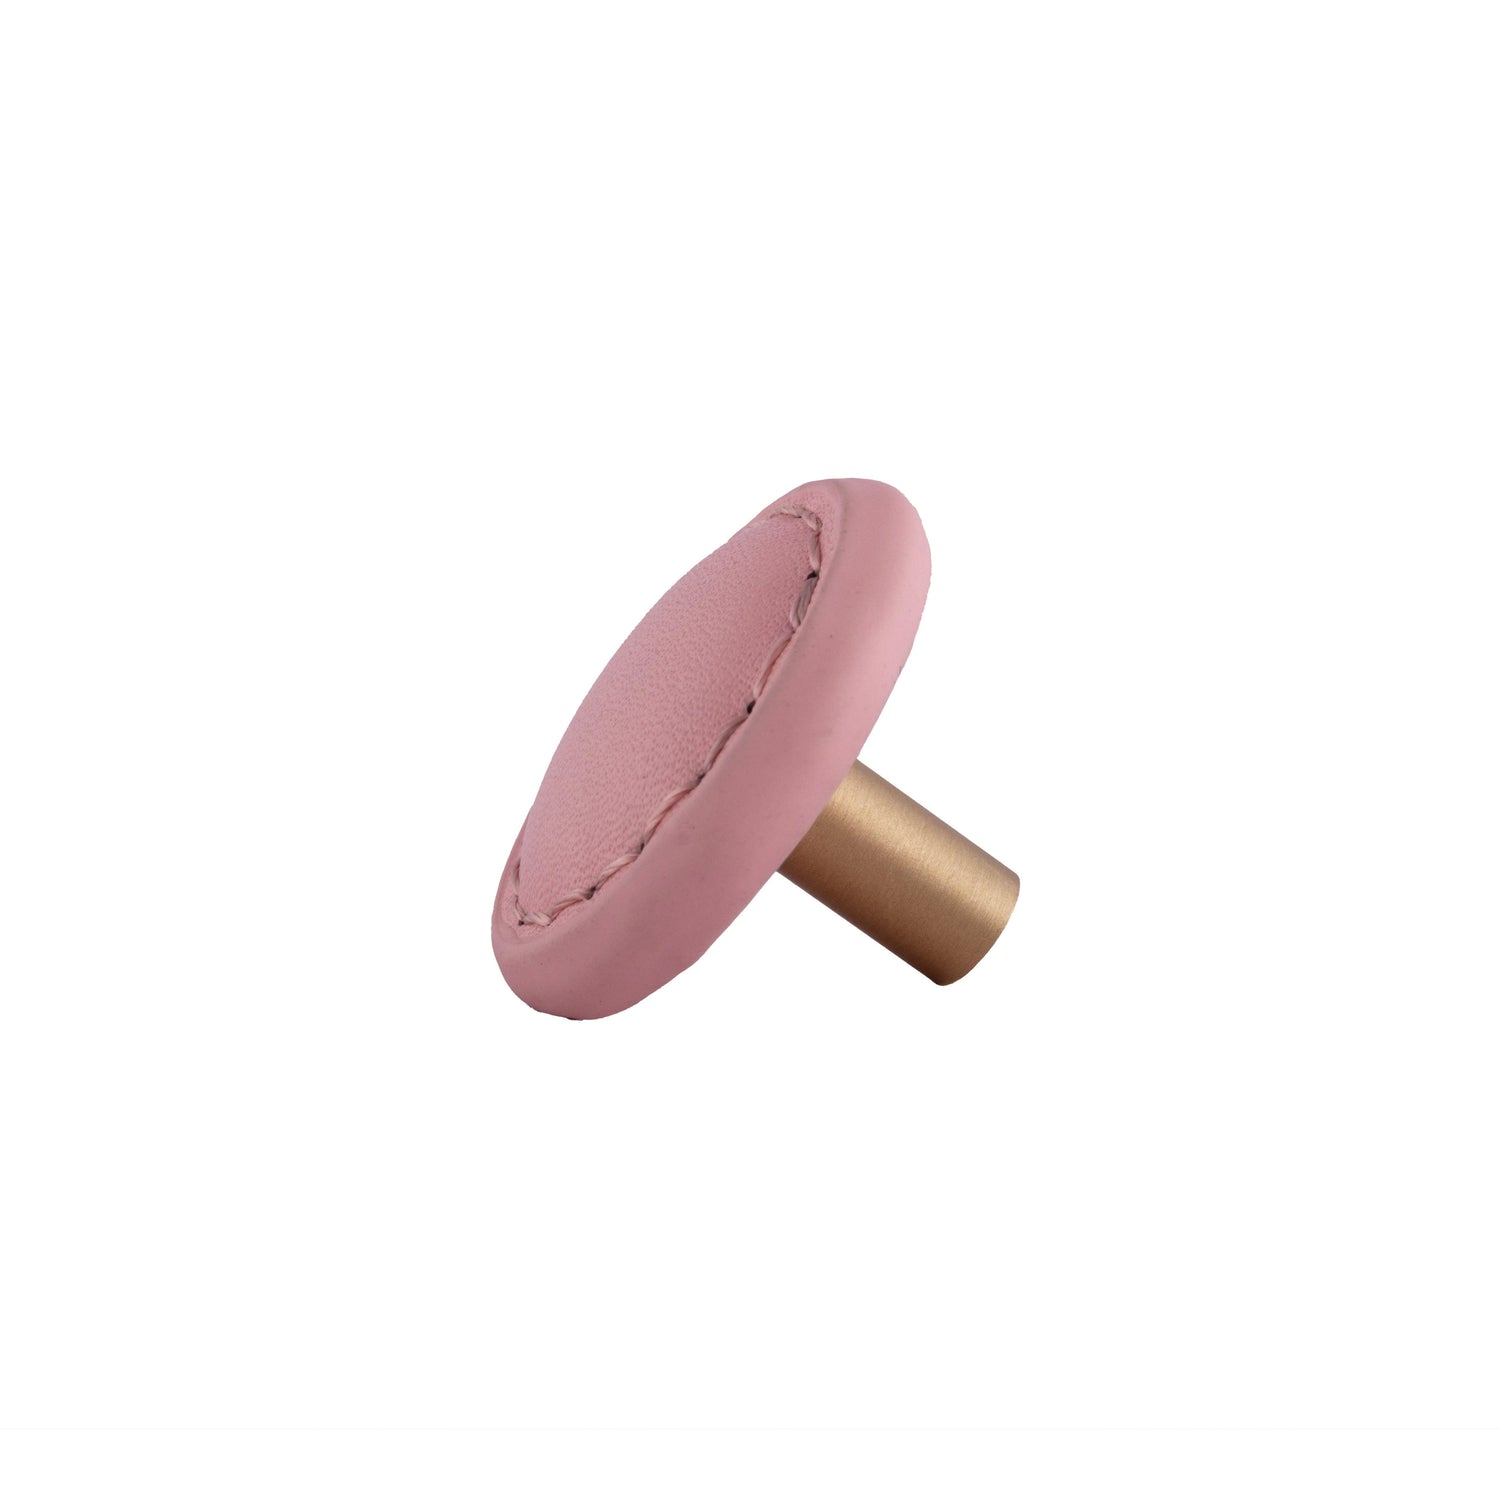 Sofia Round knob Knob 33mm / Pink / Leather - M A N T A R A